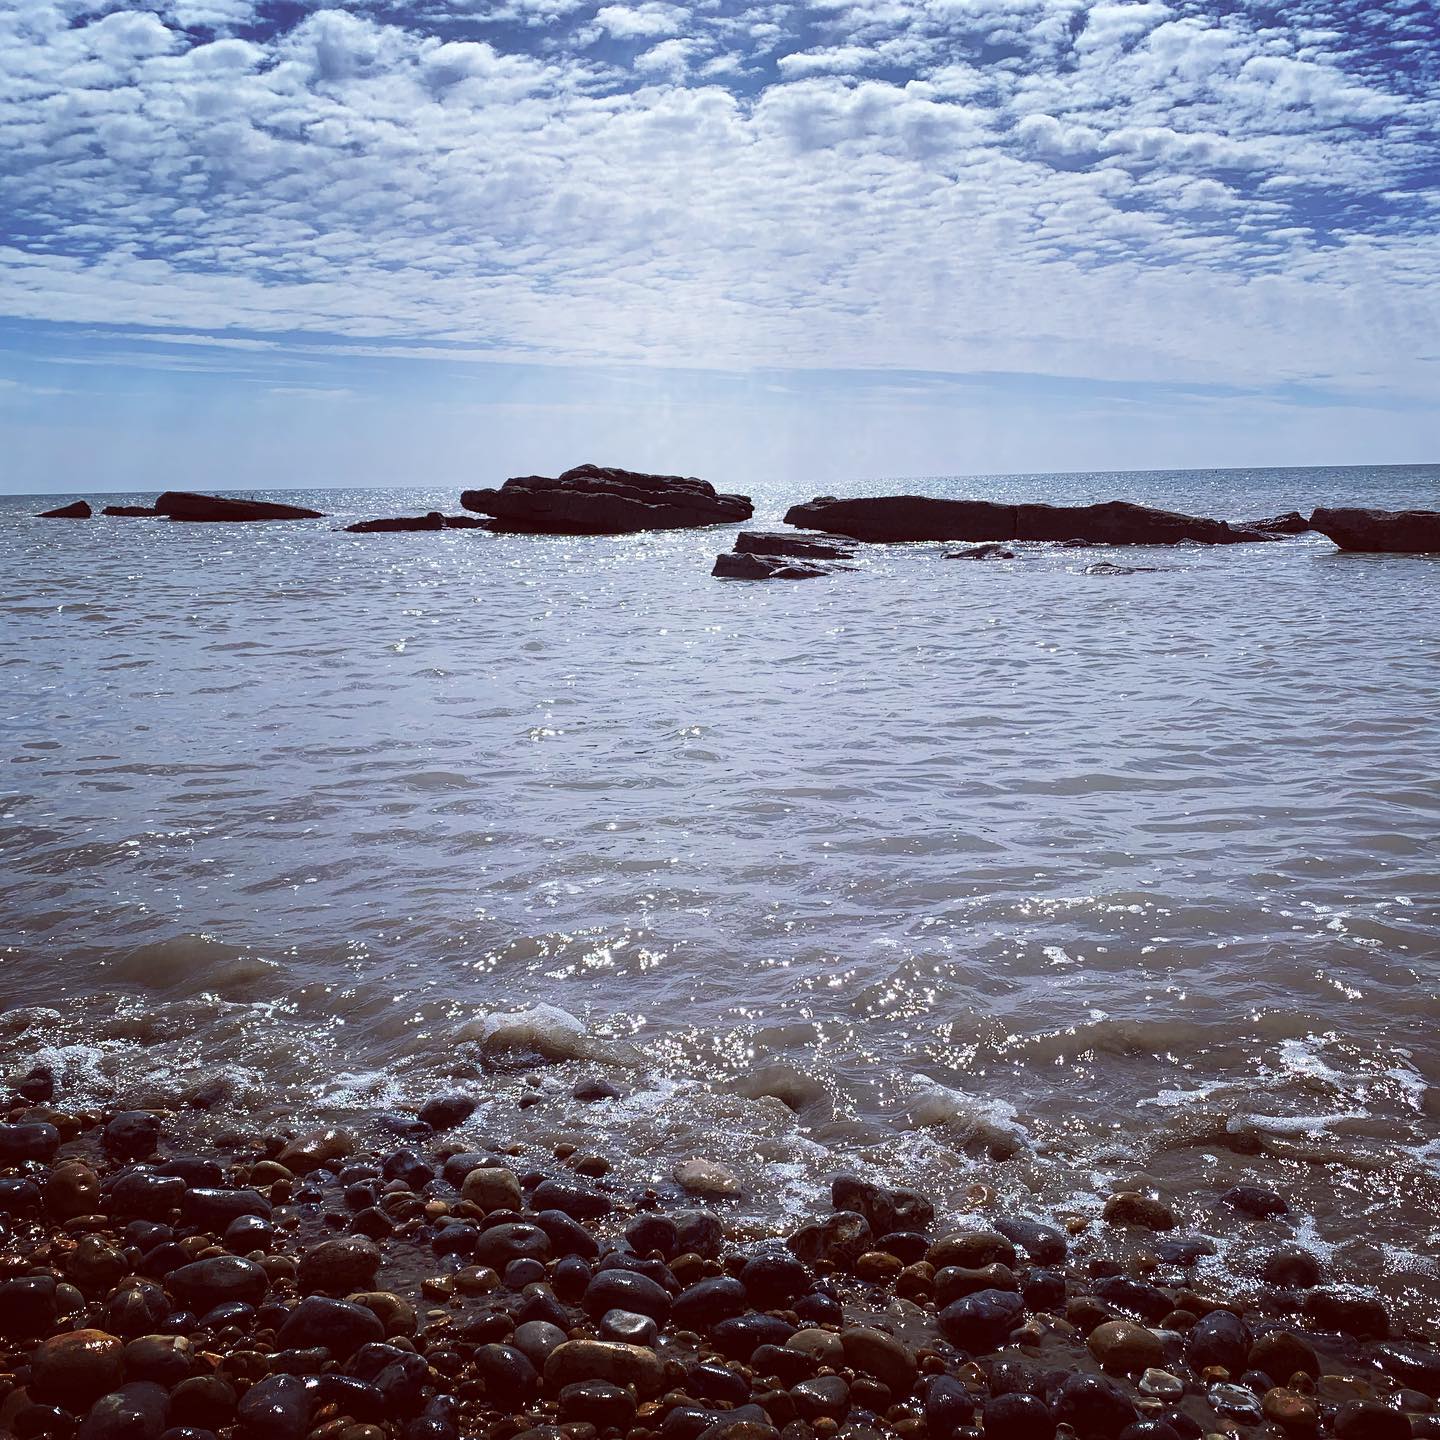 Sun dancing on the water.  #seasideliving #cambersands #ryeeastsussex #hastings